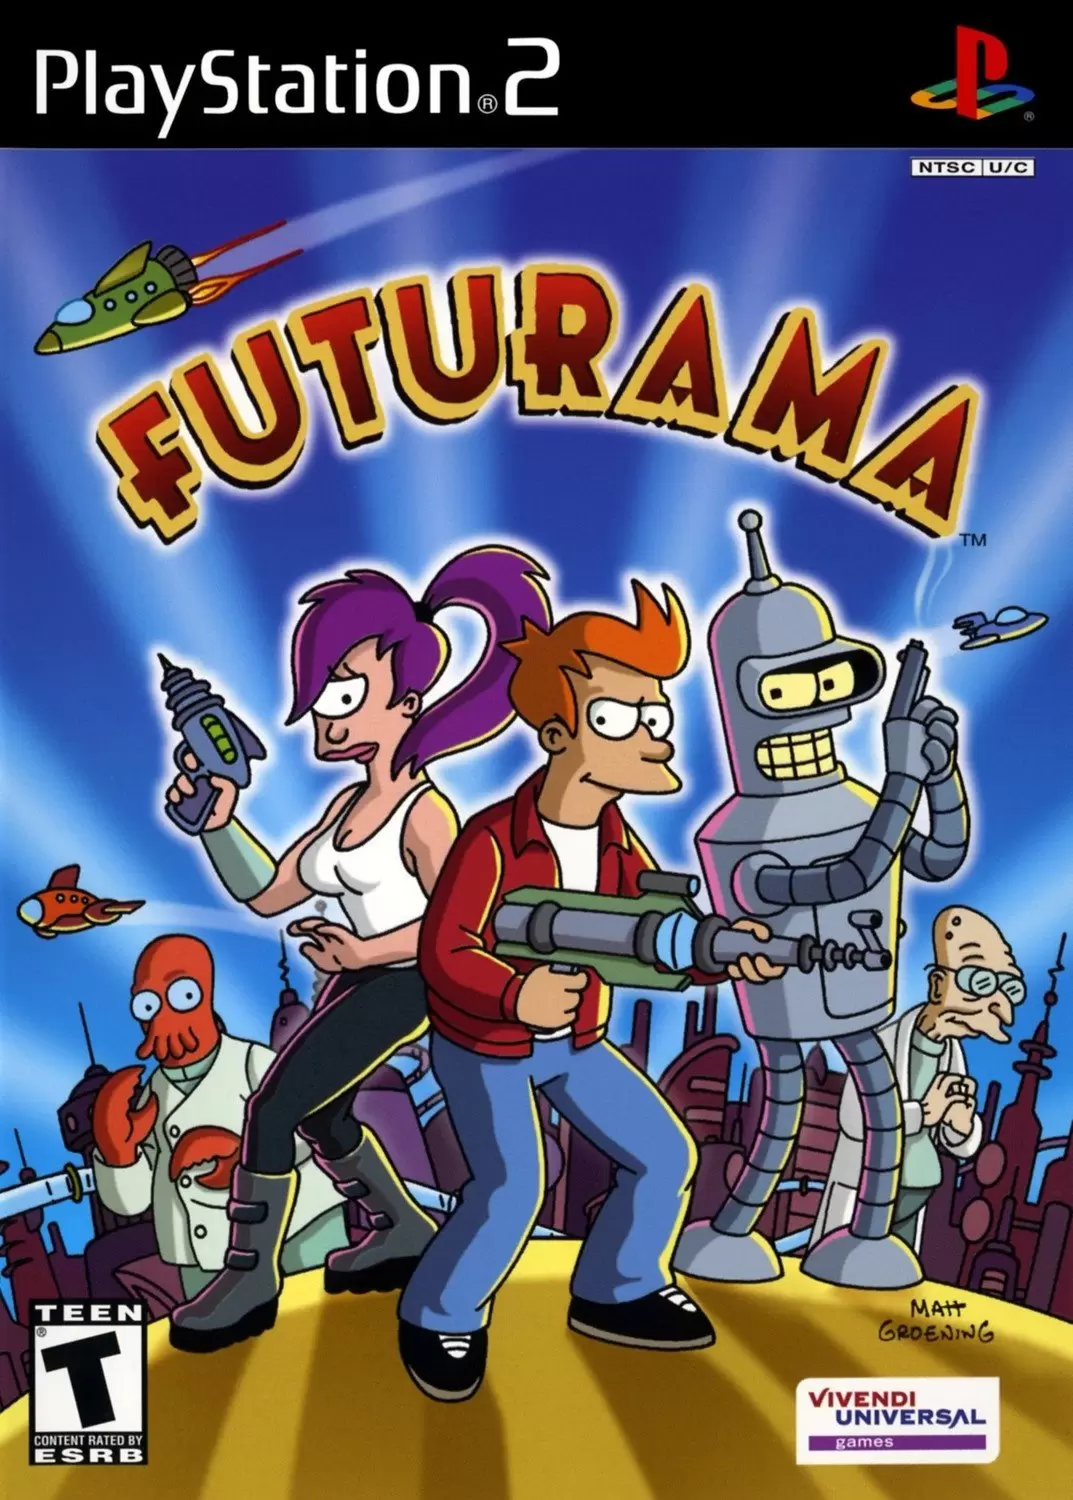 PS2 Games - Futurama